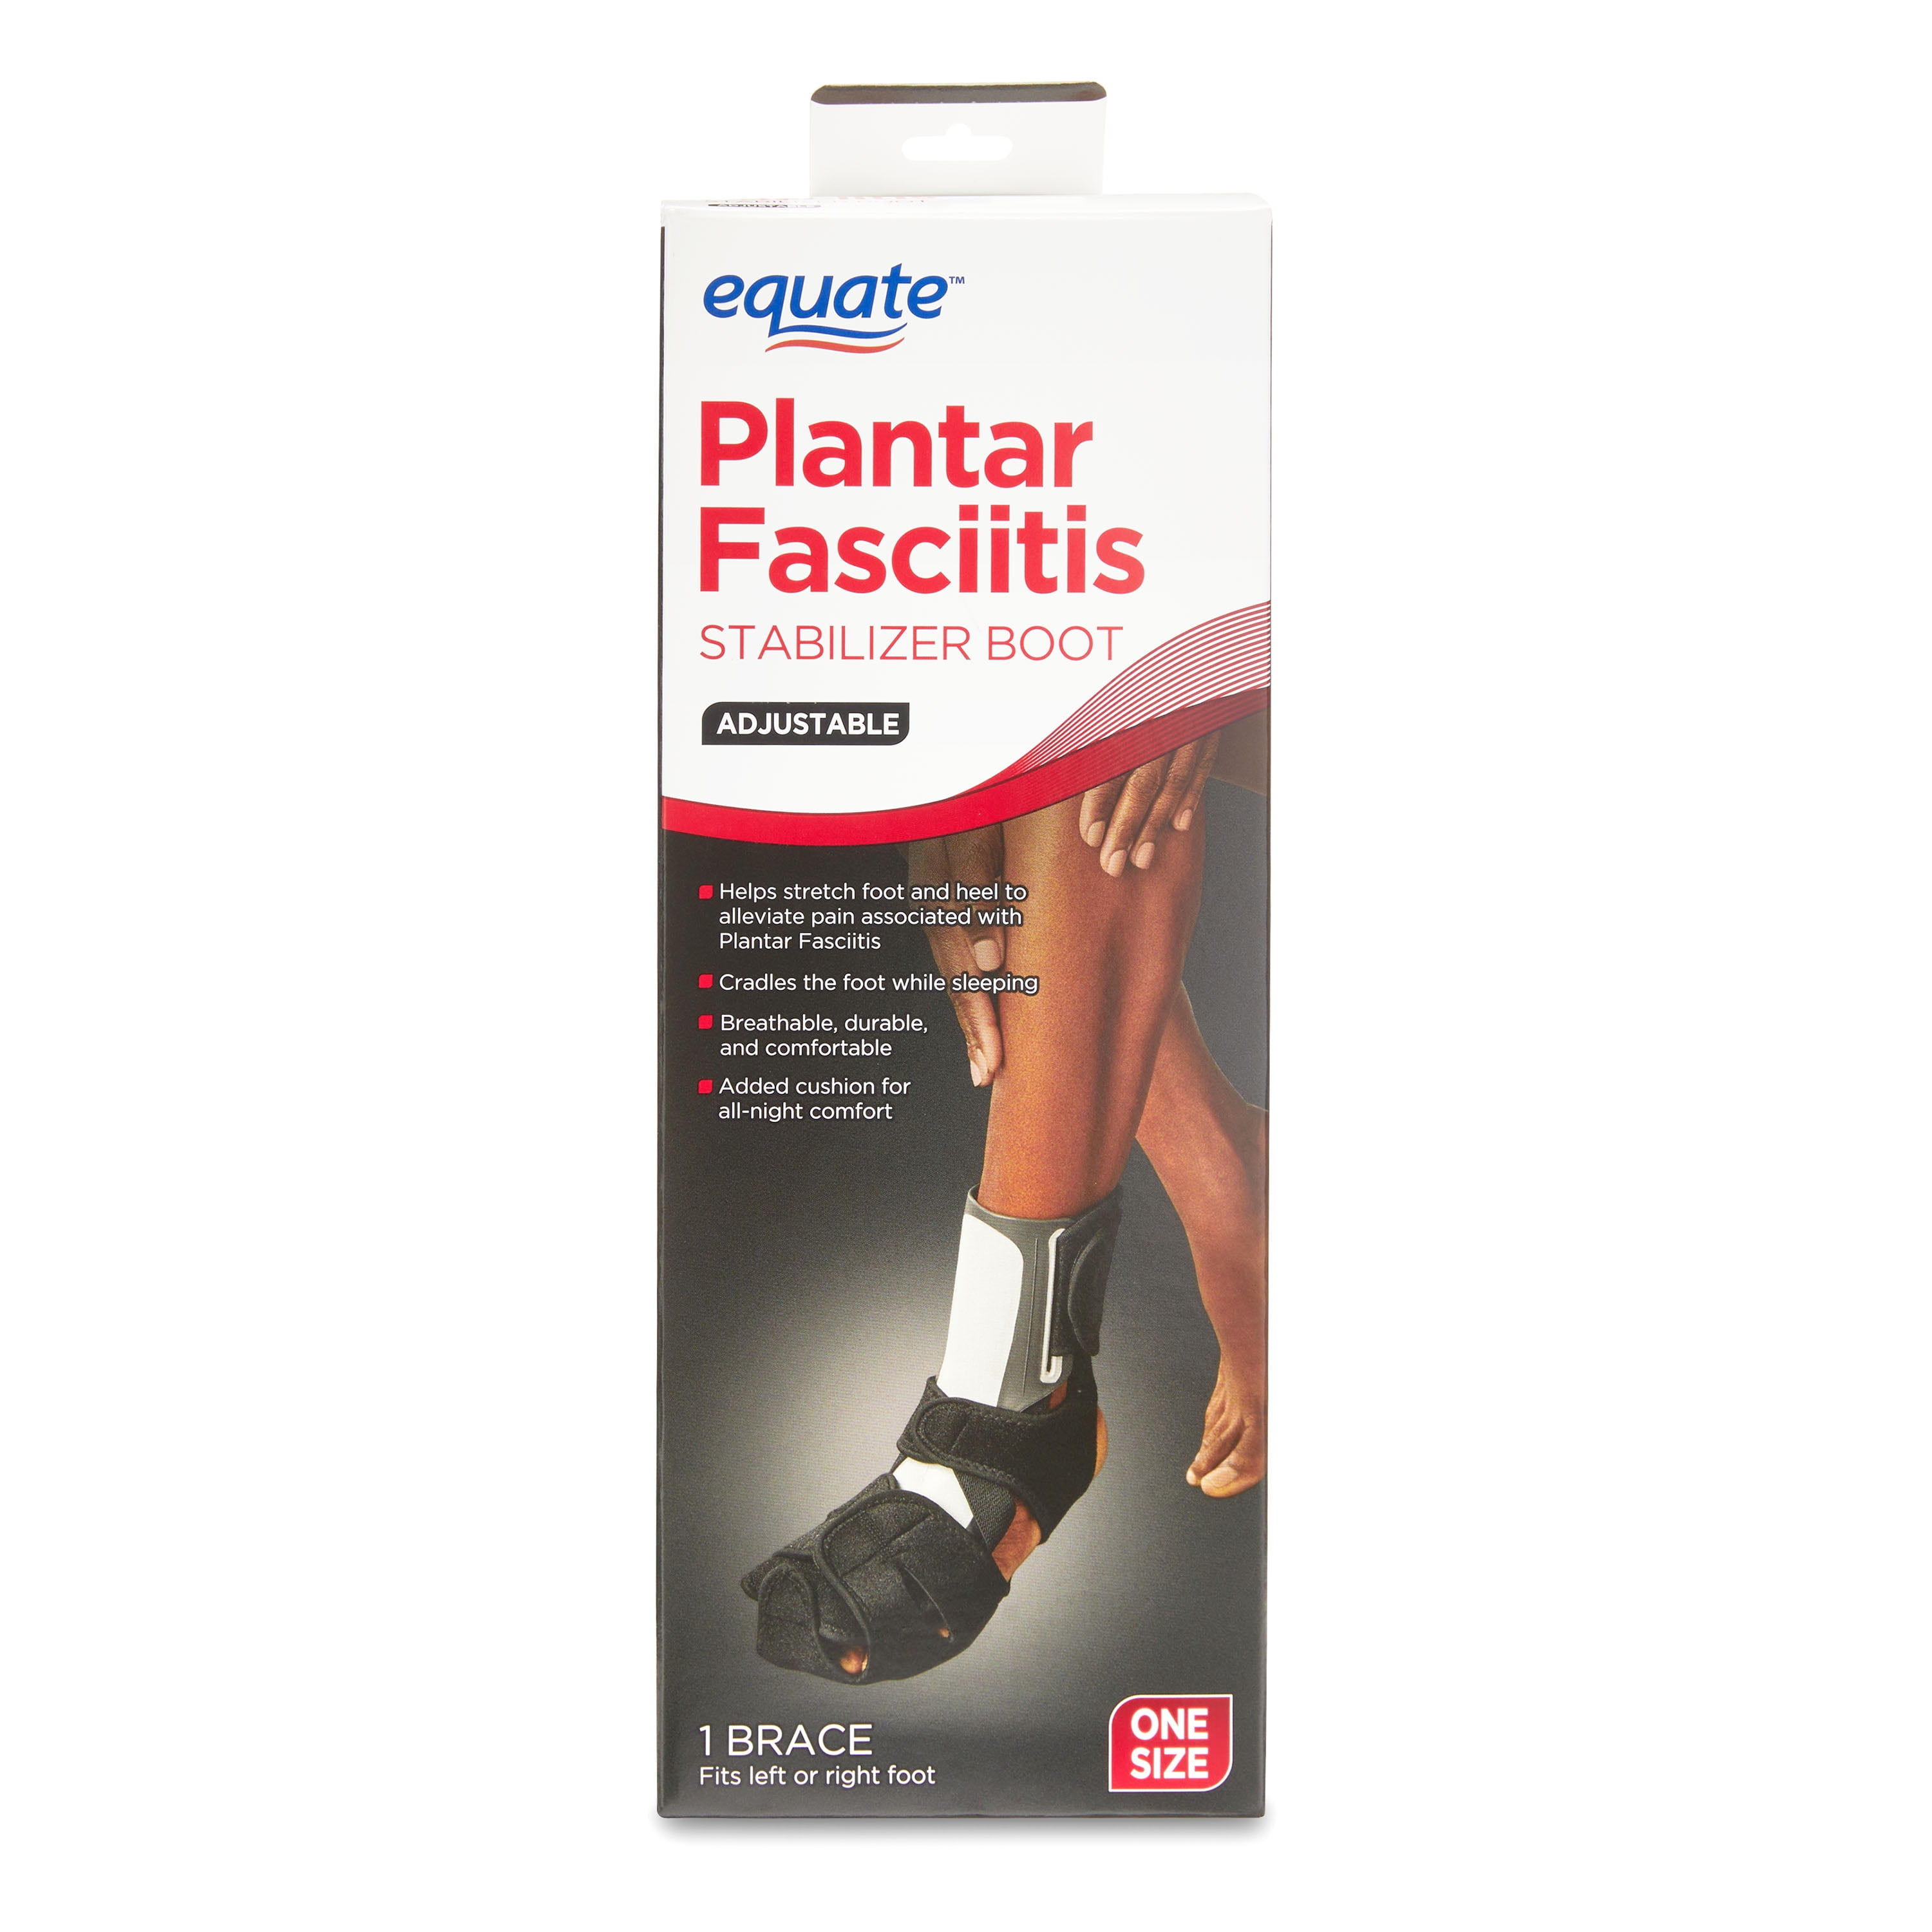 Equate Plantar Fasciitis Adjustable Stabilizer Boot, One Size